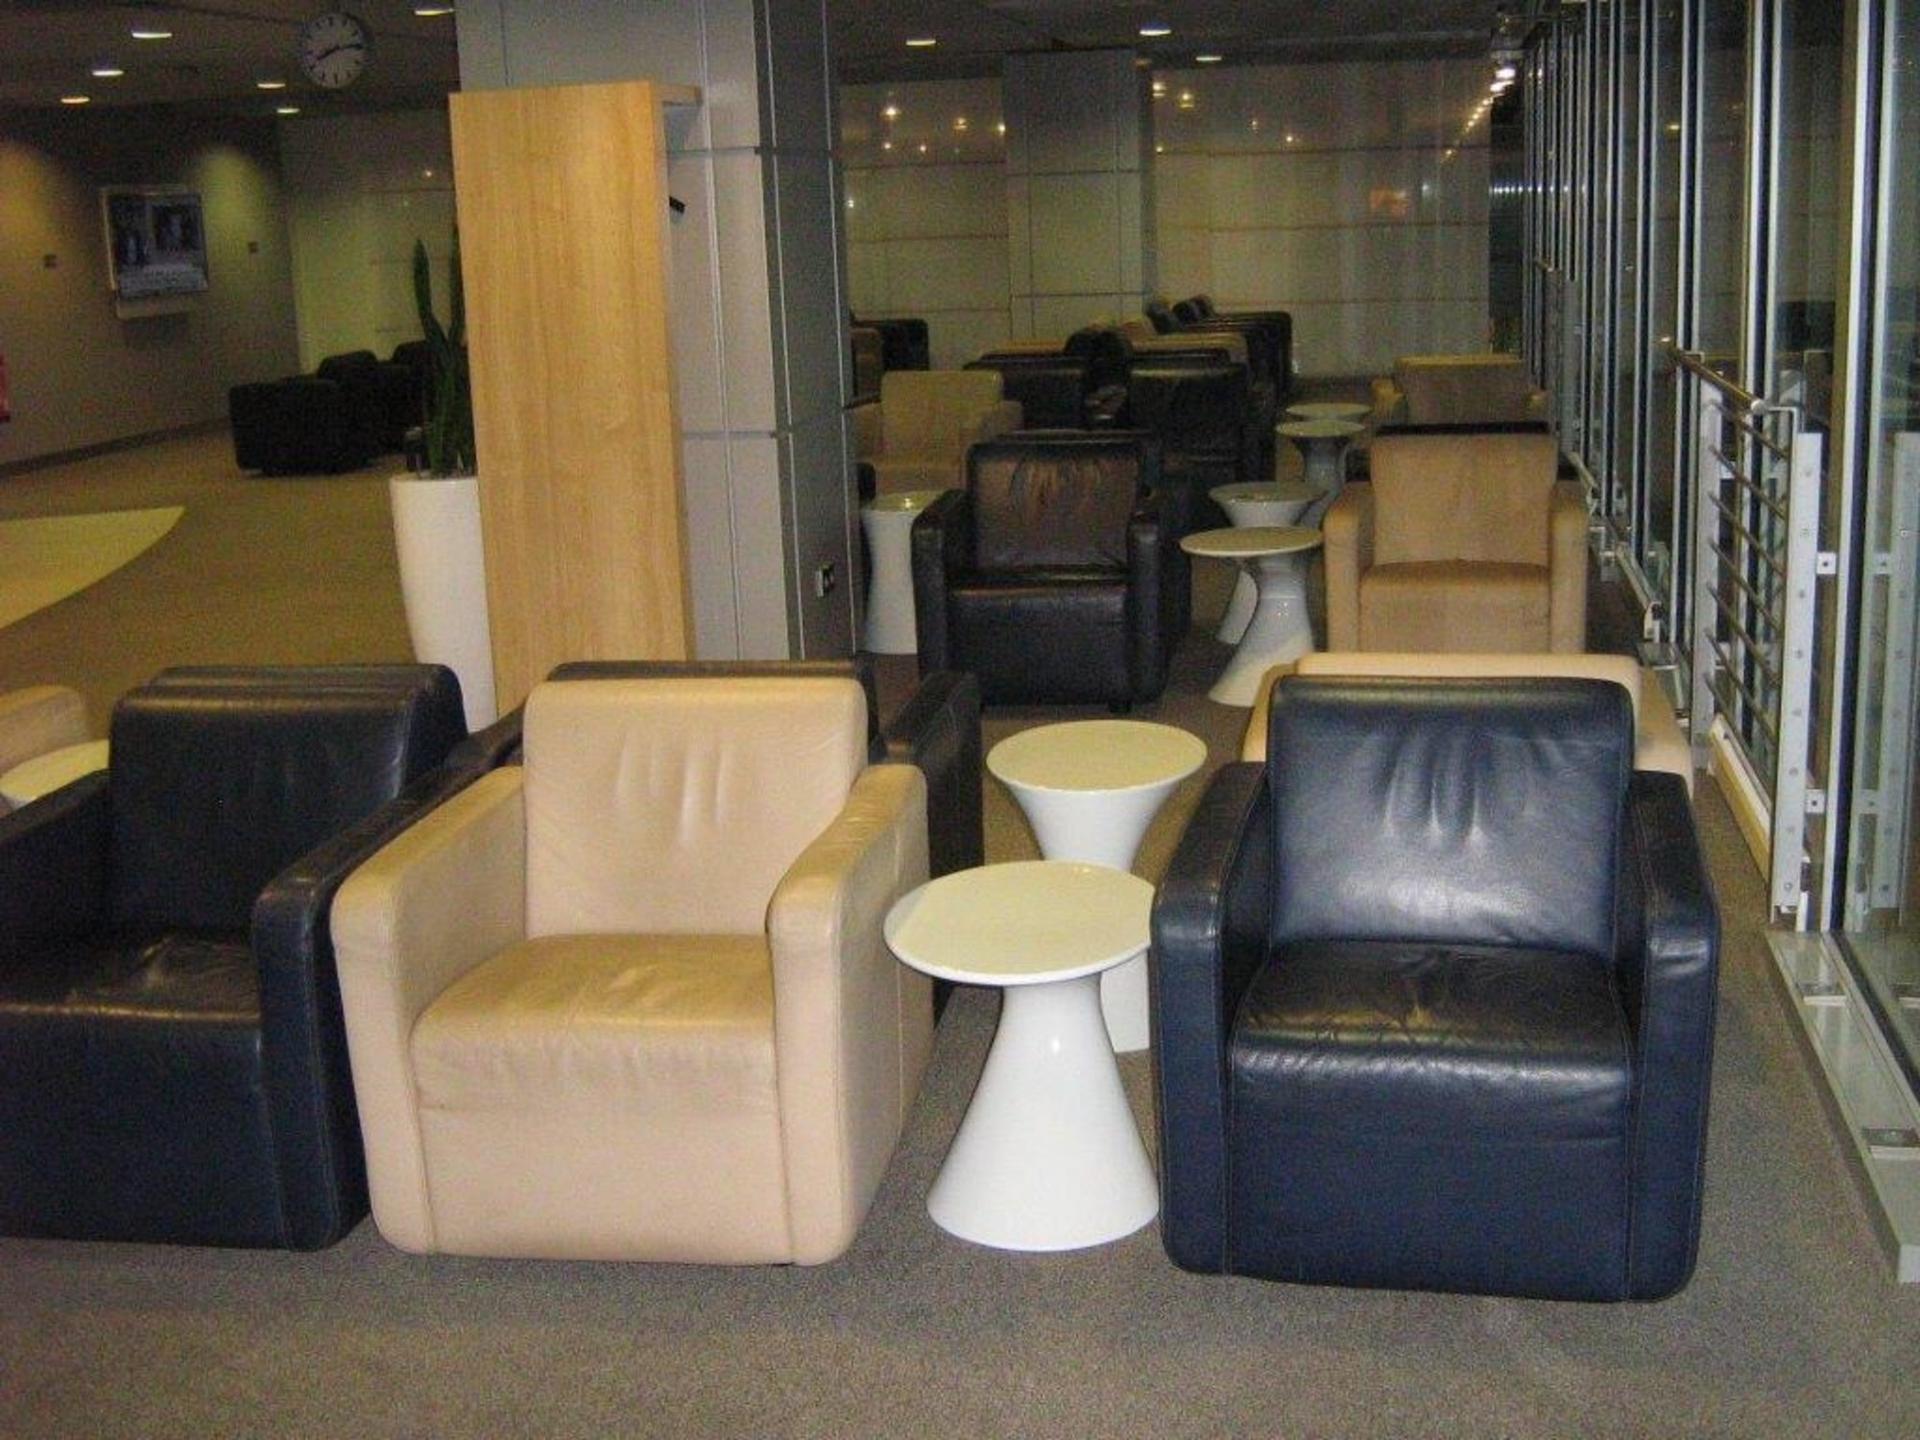 Lufthansa Business Lounge image 10 of 22